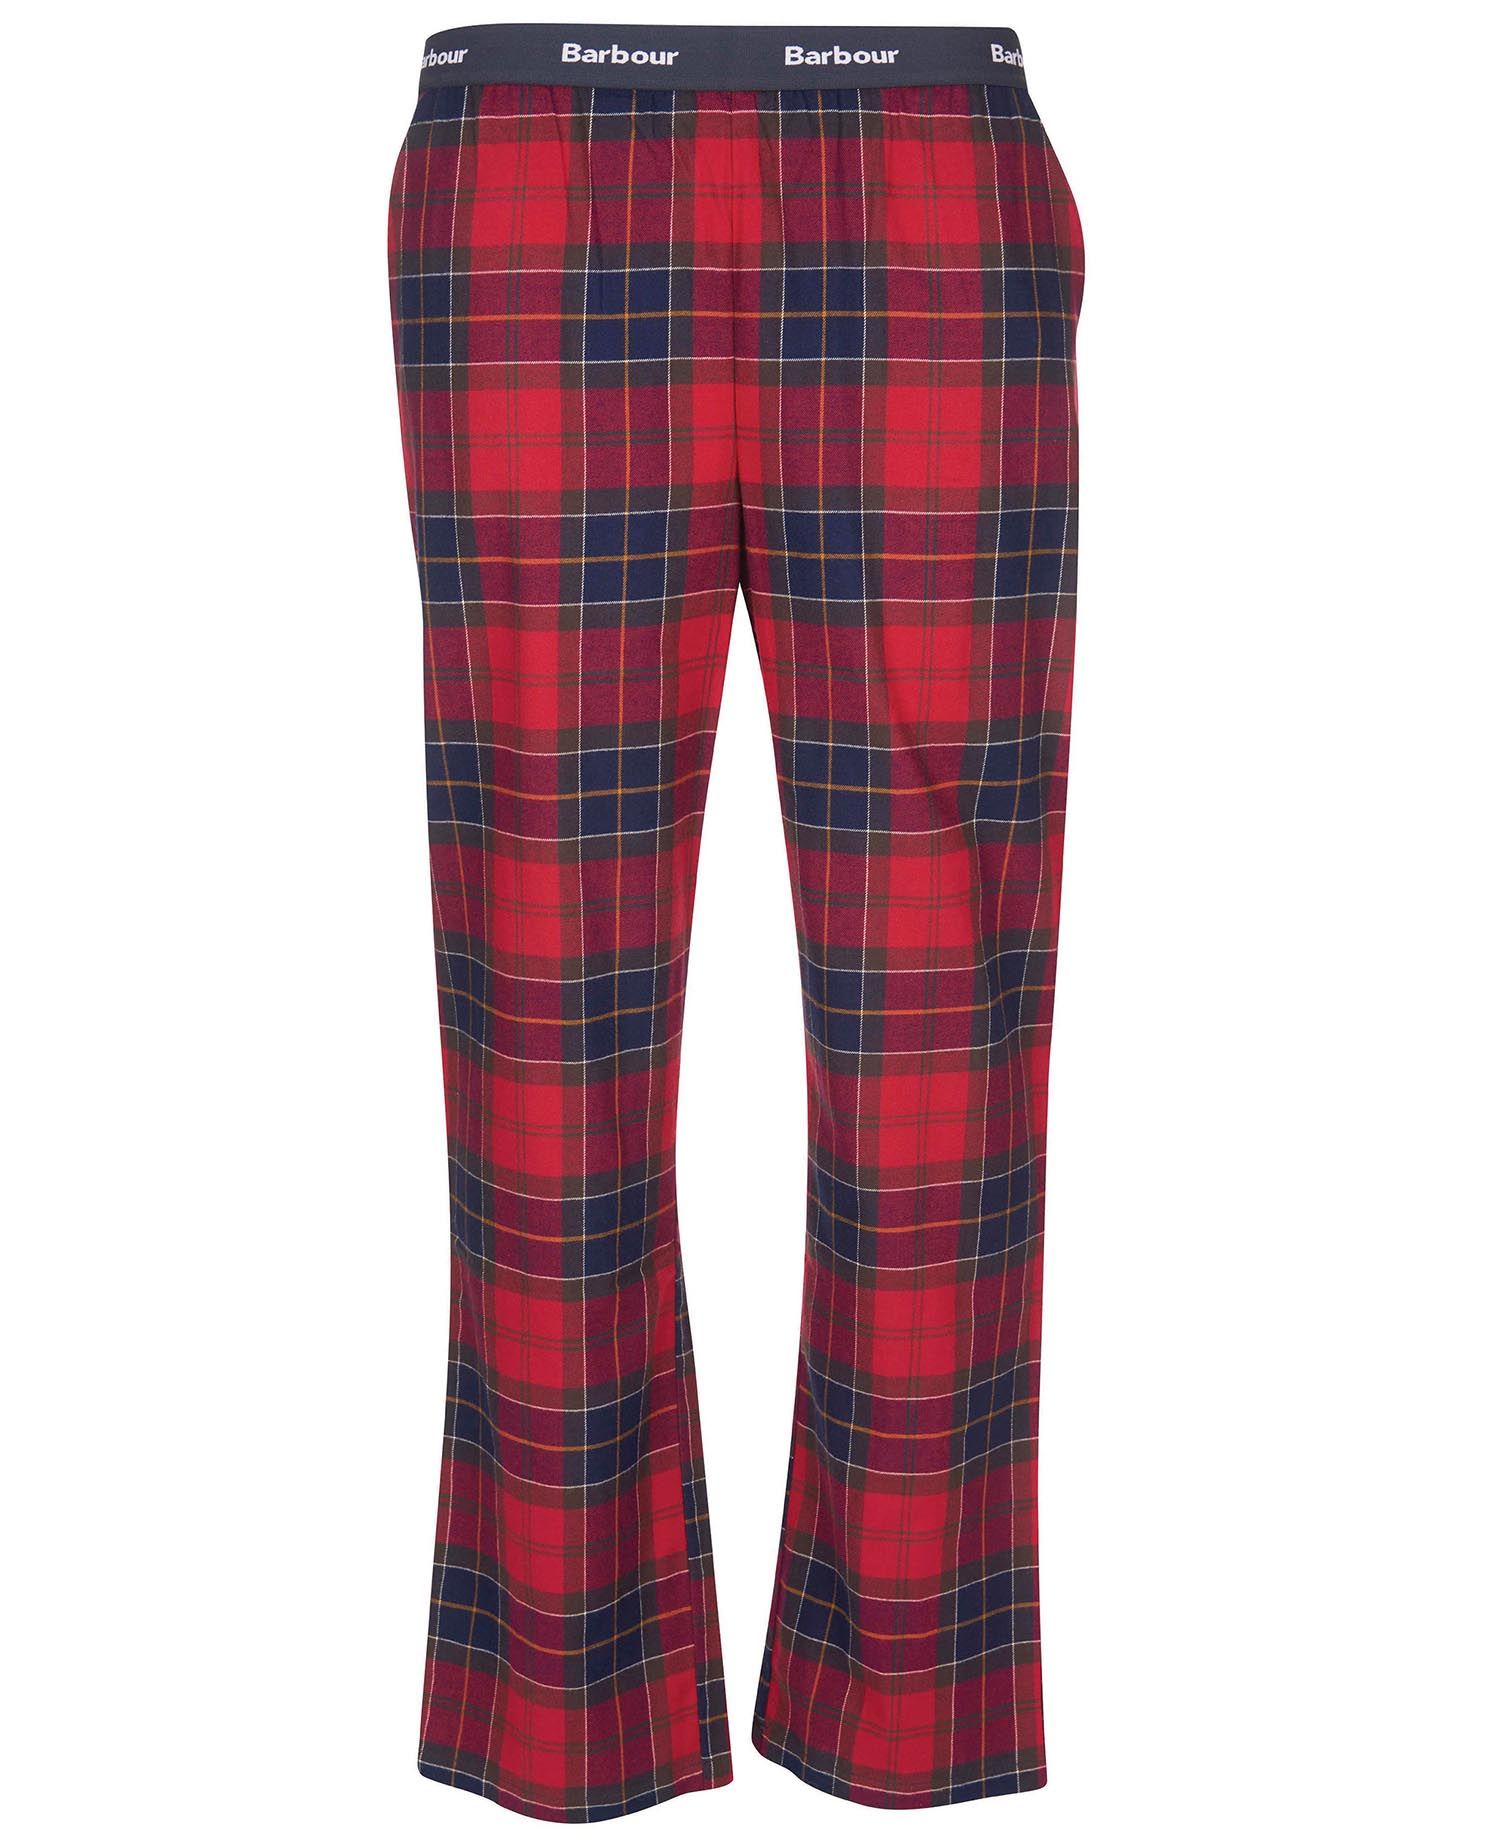 Buy Onfire Mens Woven Check Pyjama Pants Burgundy/Dark Navy